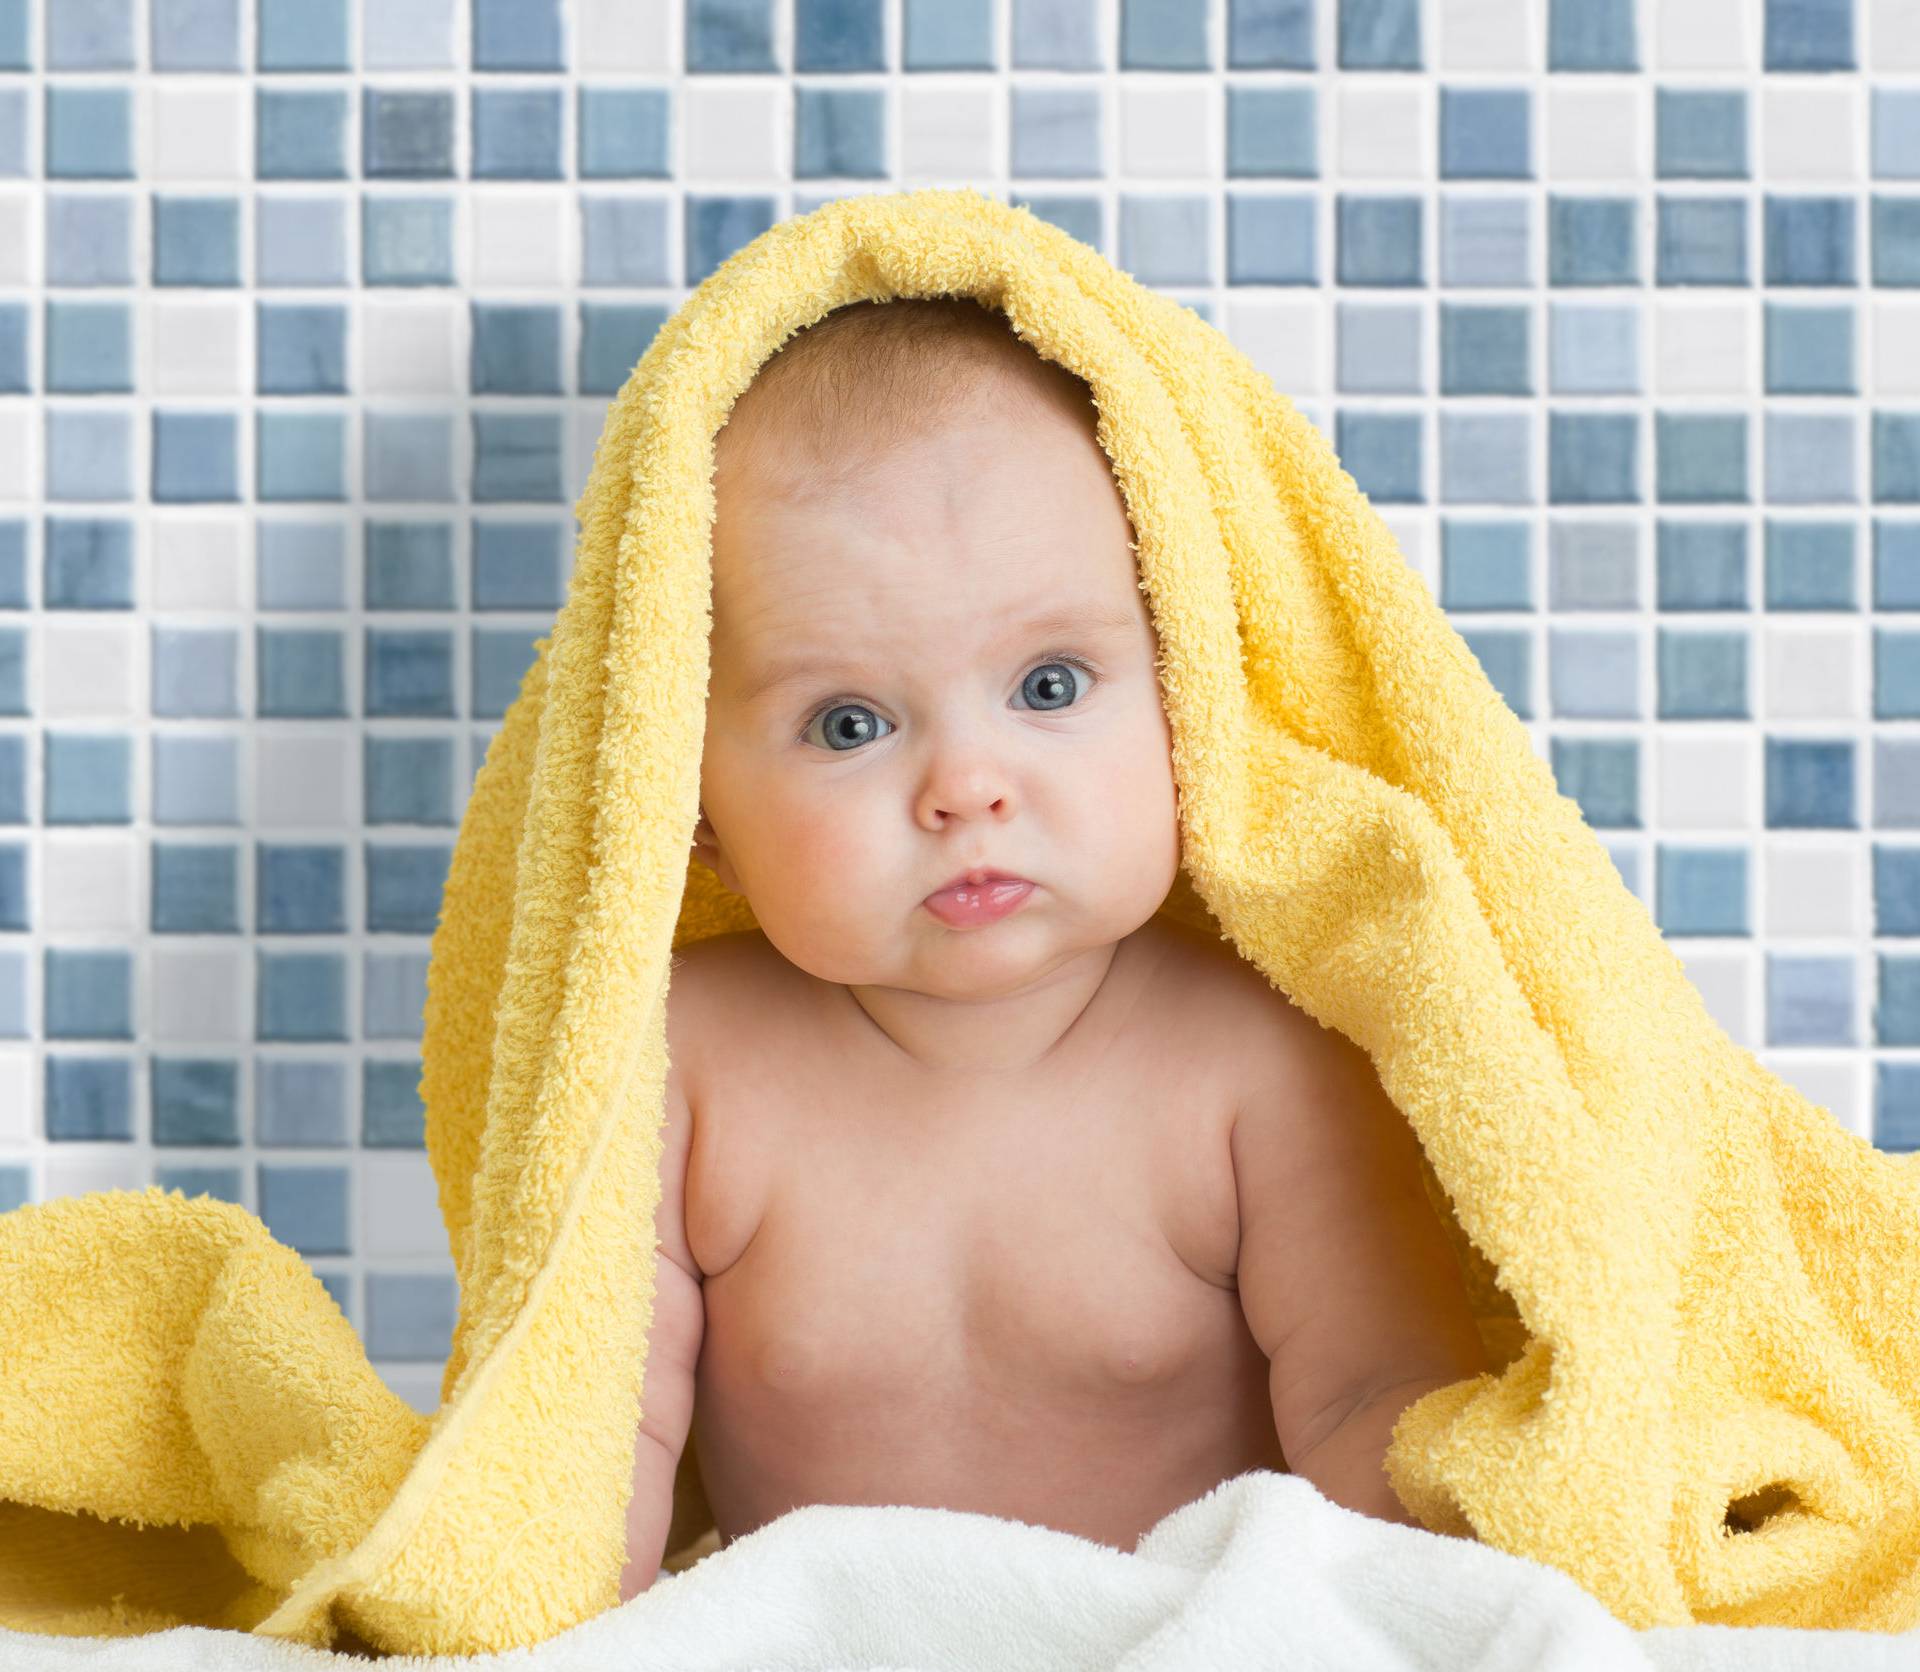 Cute baby in bath towel